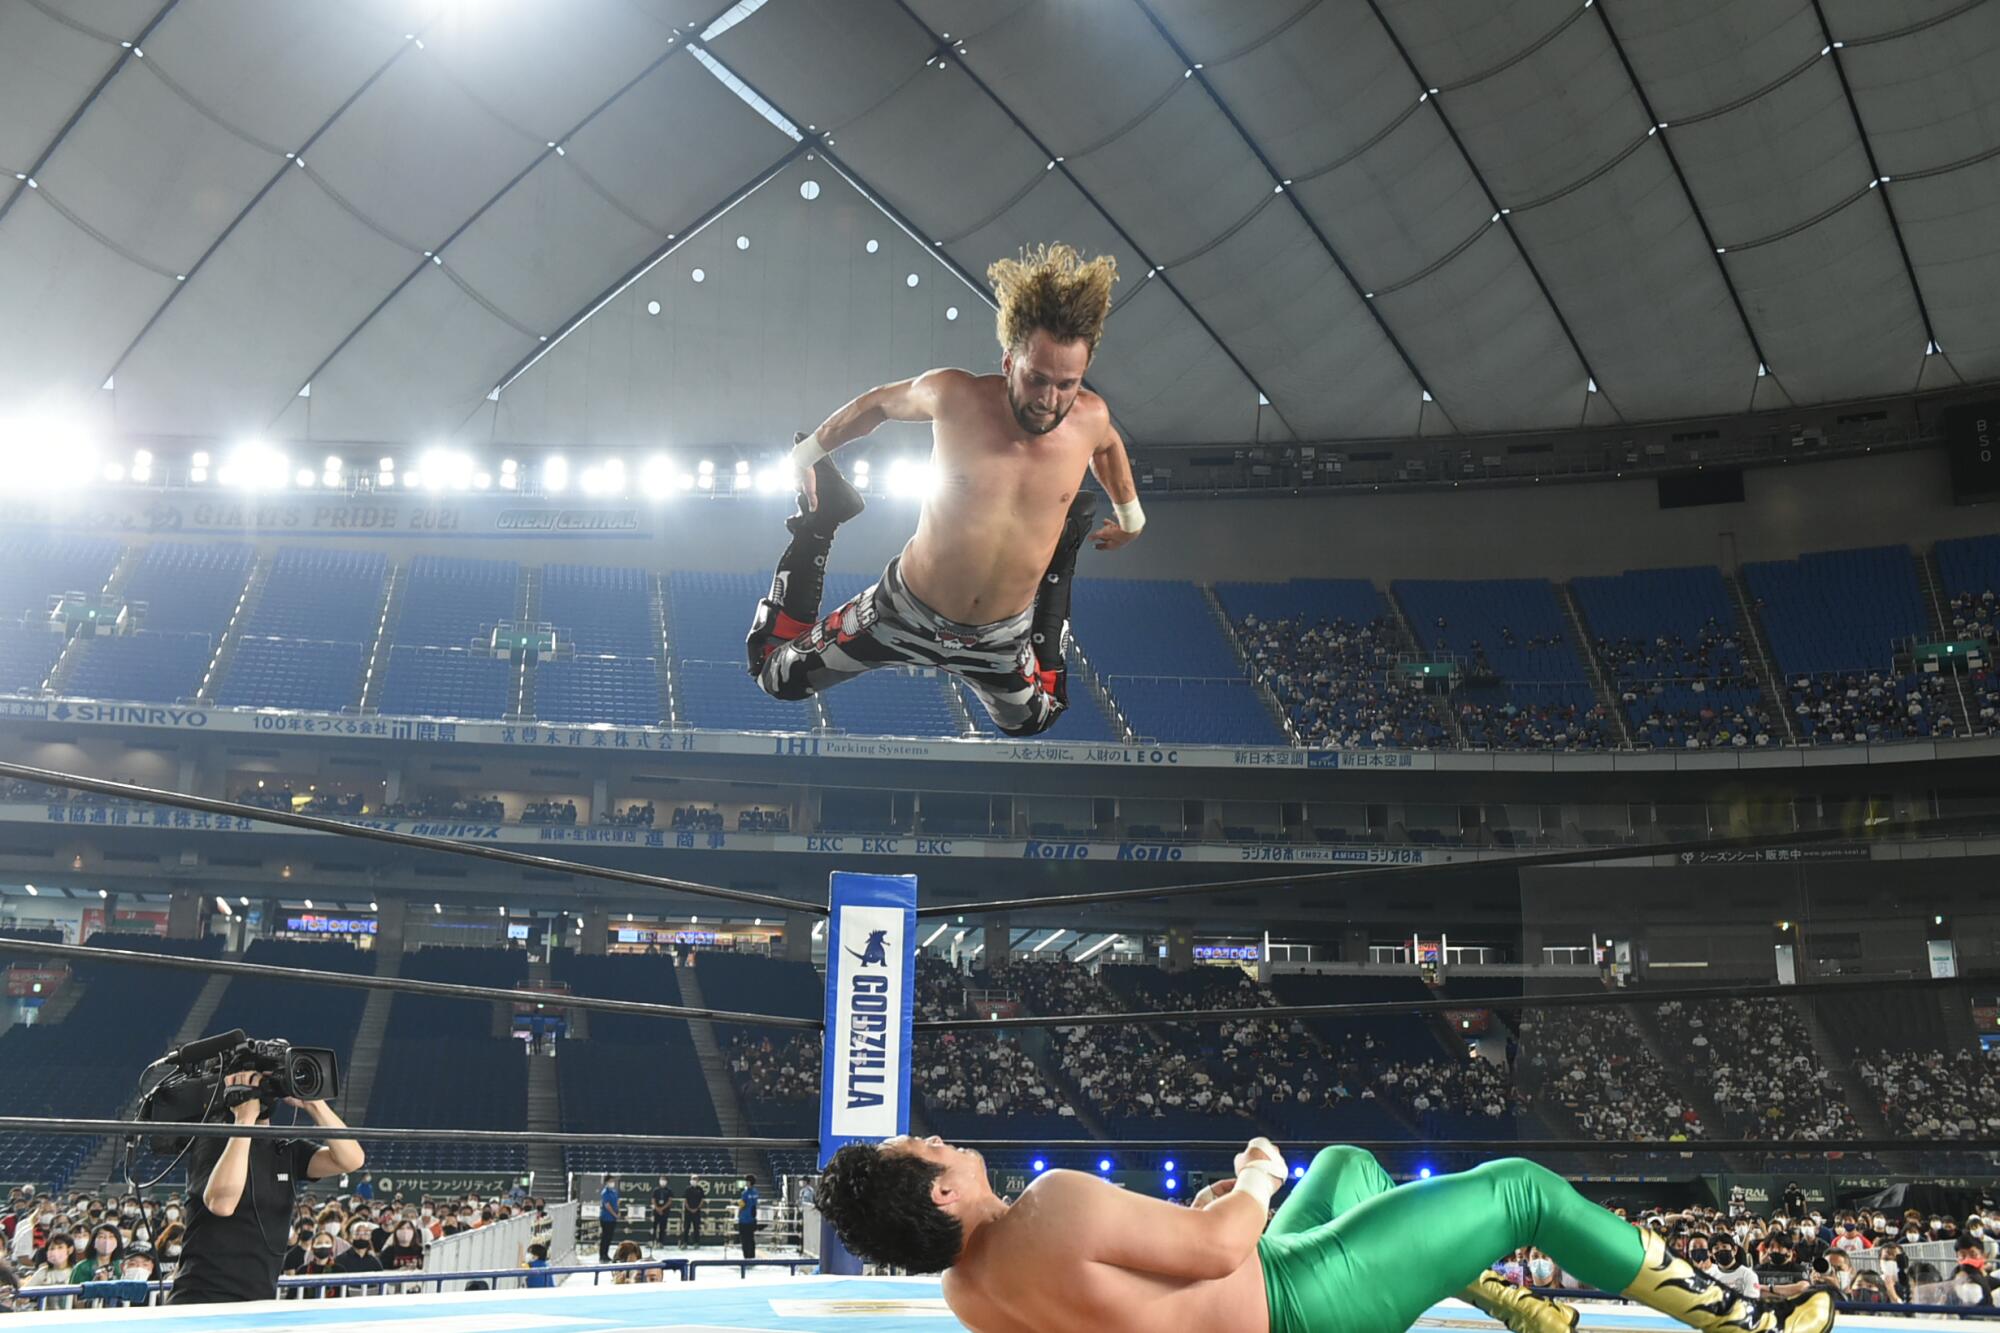 "El Phantasmo" leaps midair, high above Ryusuke Taguchi, who lies on the wrestling mat and looks up at him.